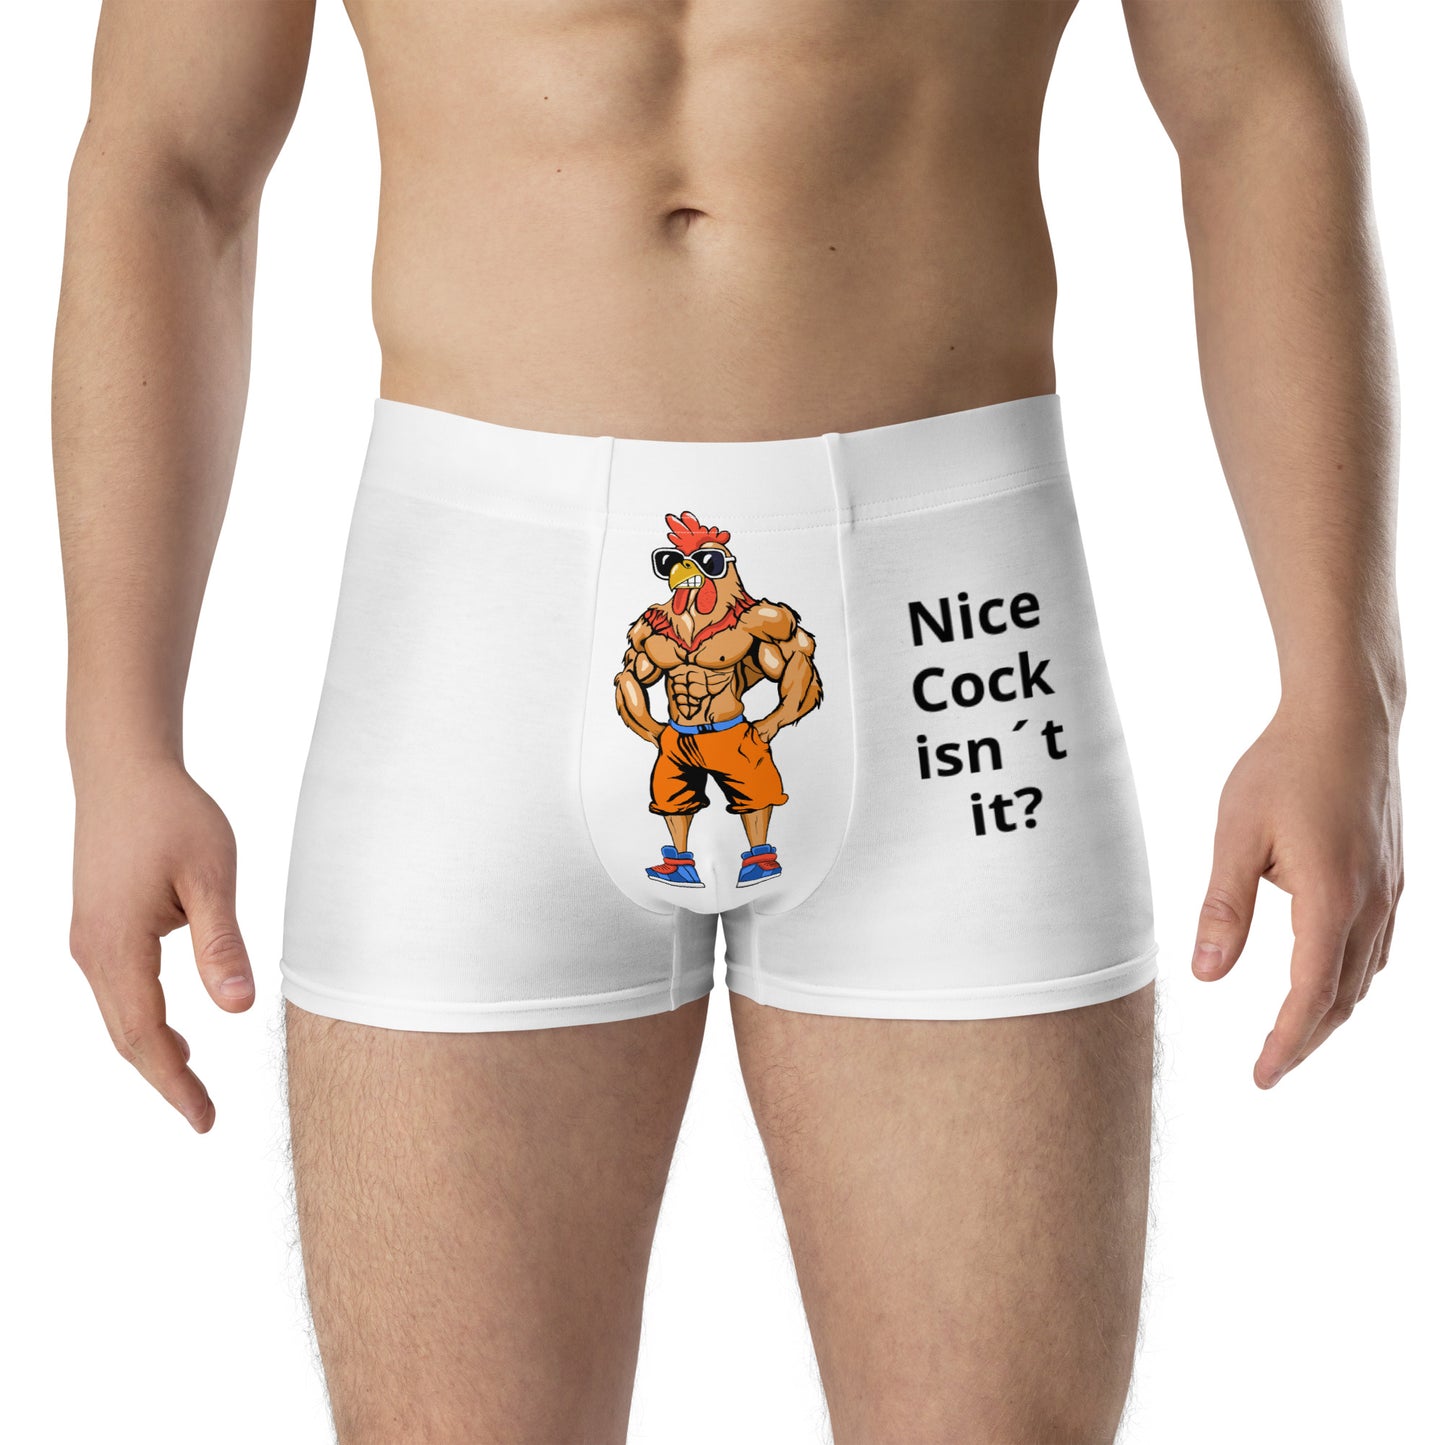 Nice Cock isn´t it? - Boxer Briefs